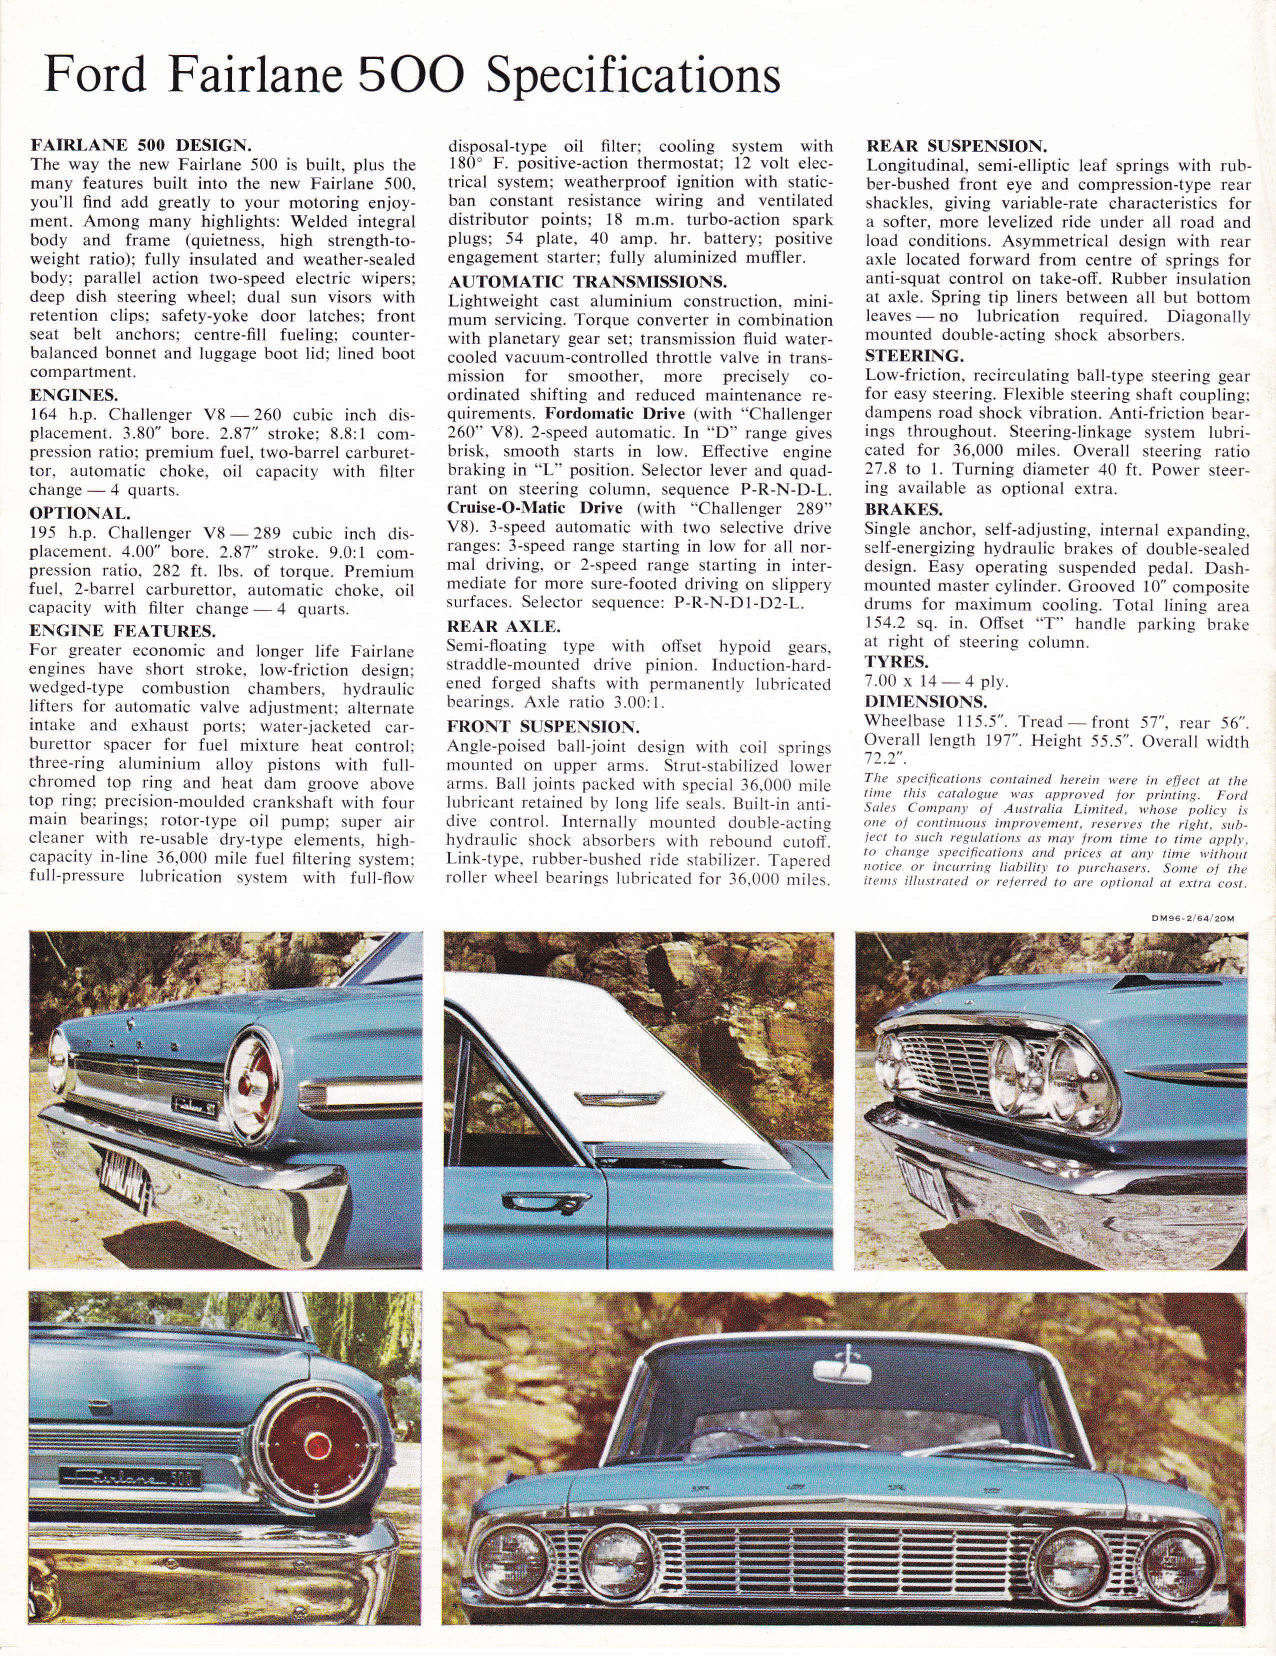 1964_Ford_Fairlane_500-08